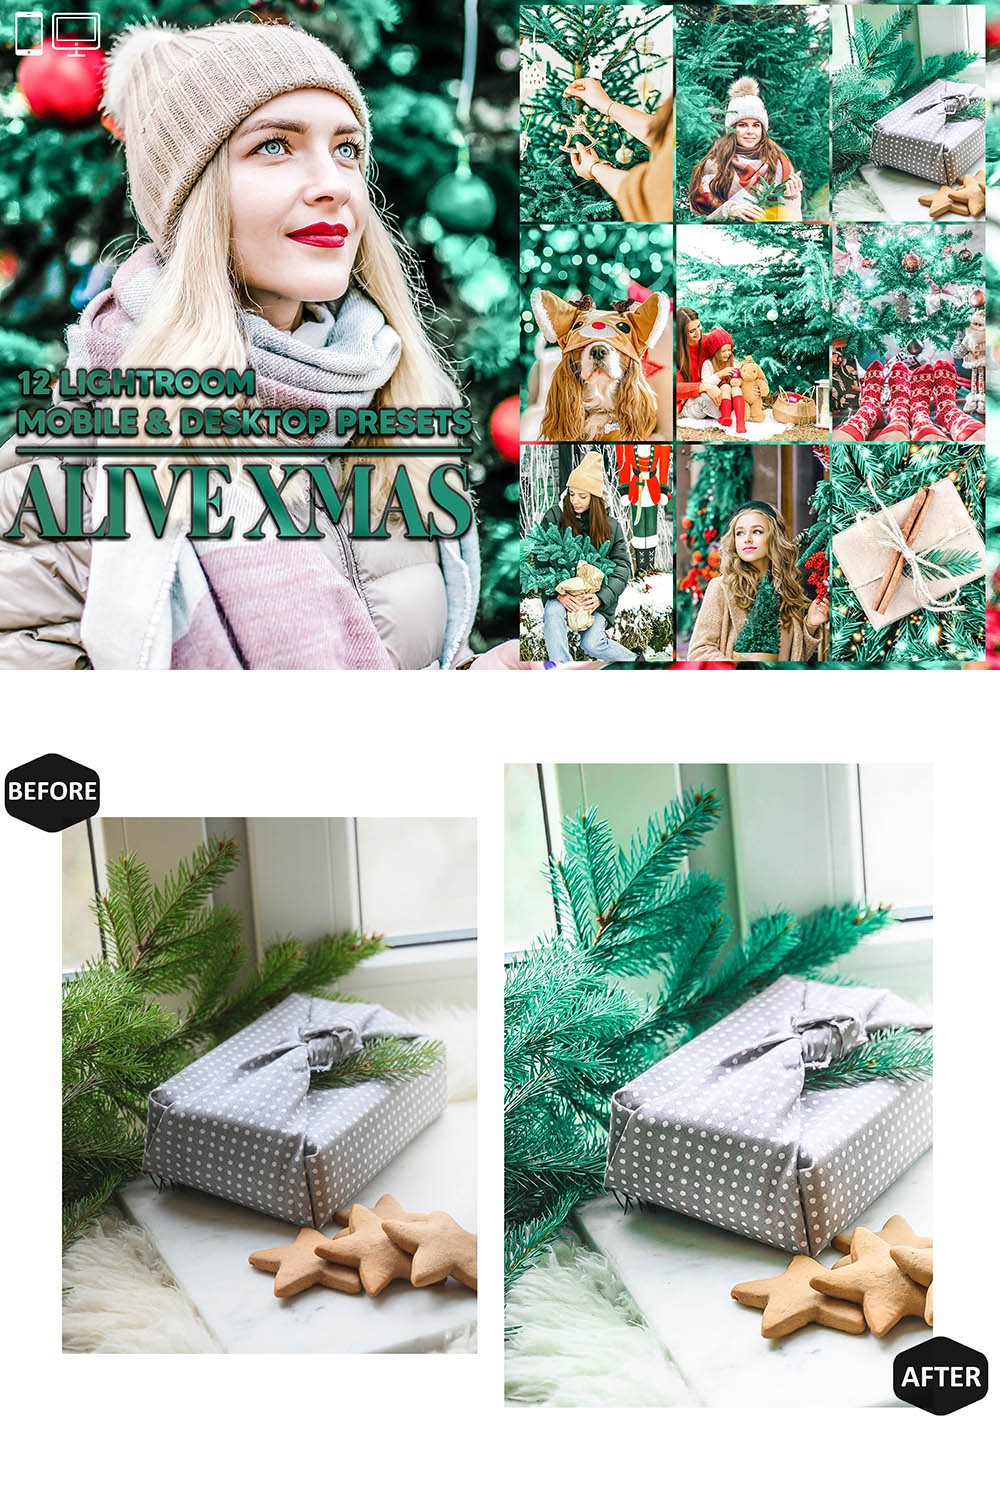 12 Alive Xmas Lightroom Presets, Christmas Mobile Preset, December Holiday Desktop LR Filter Scheme Lifestyle Theme For Portrait, Instagram pinterest preview image.